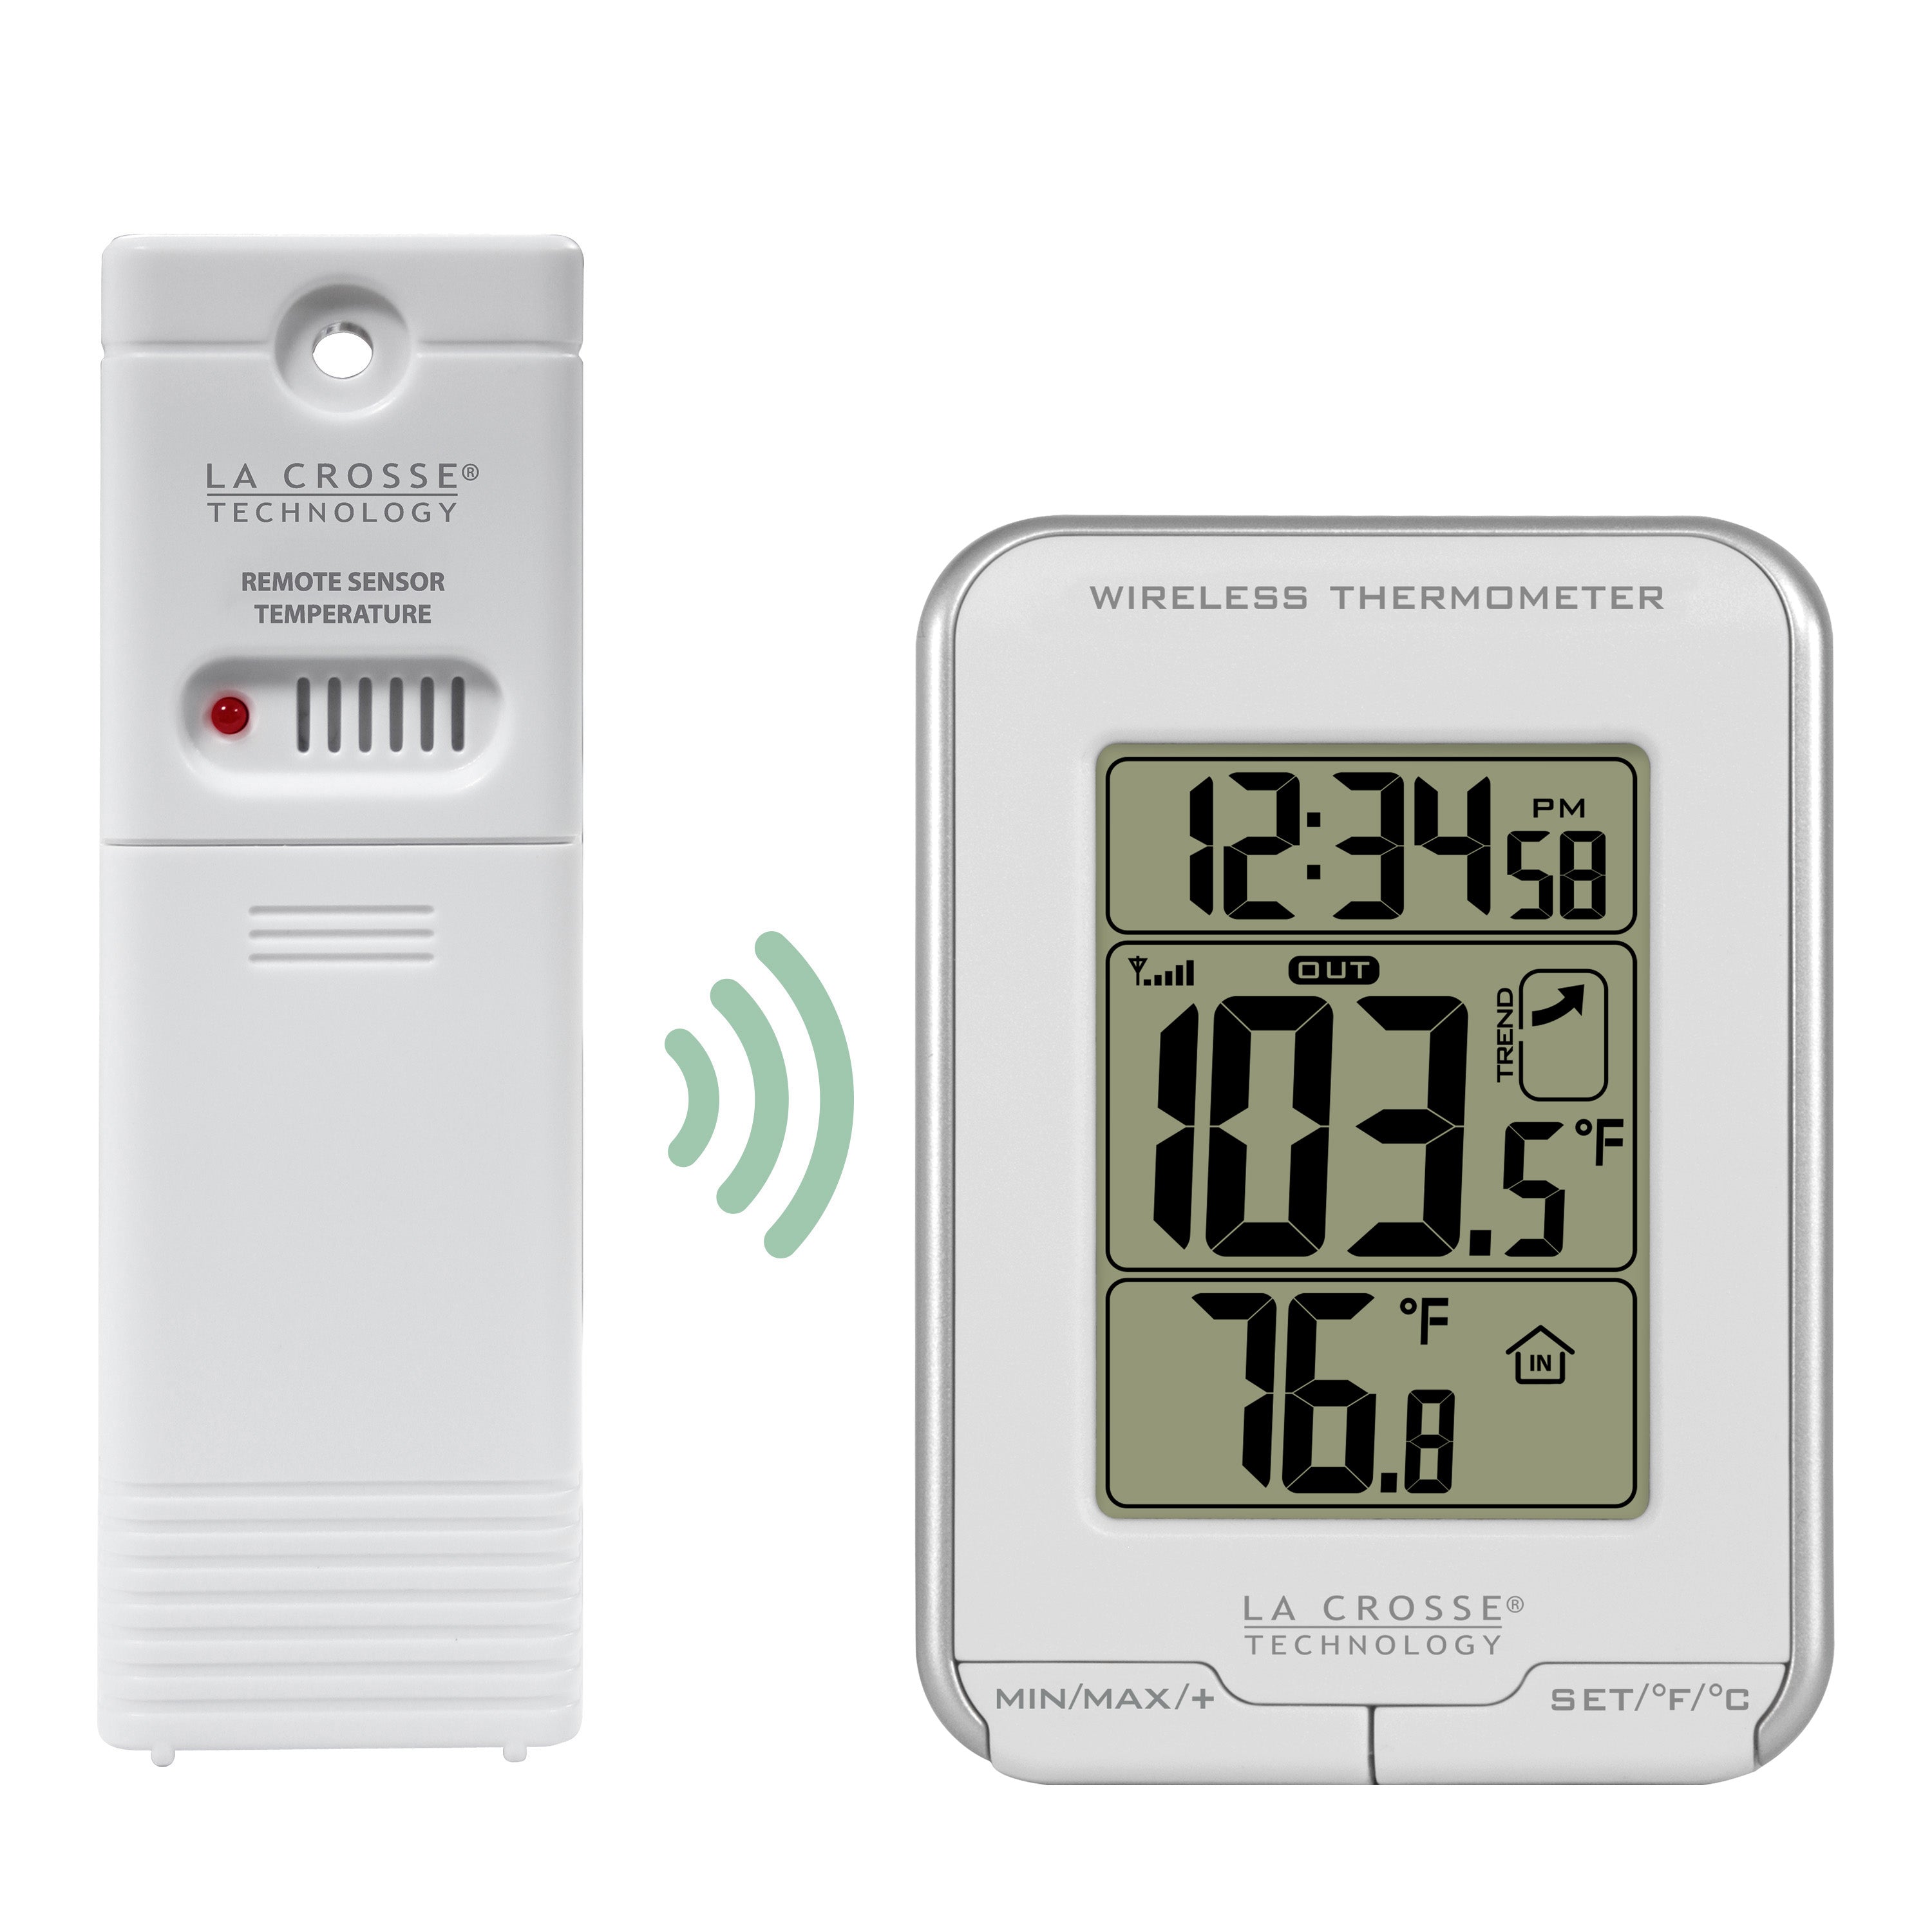 Tx141-a La Crosse Technology Wireless Temperature Sensor for